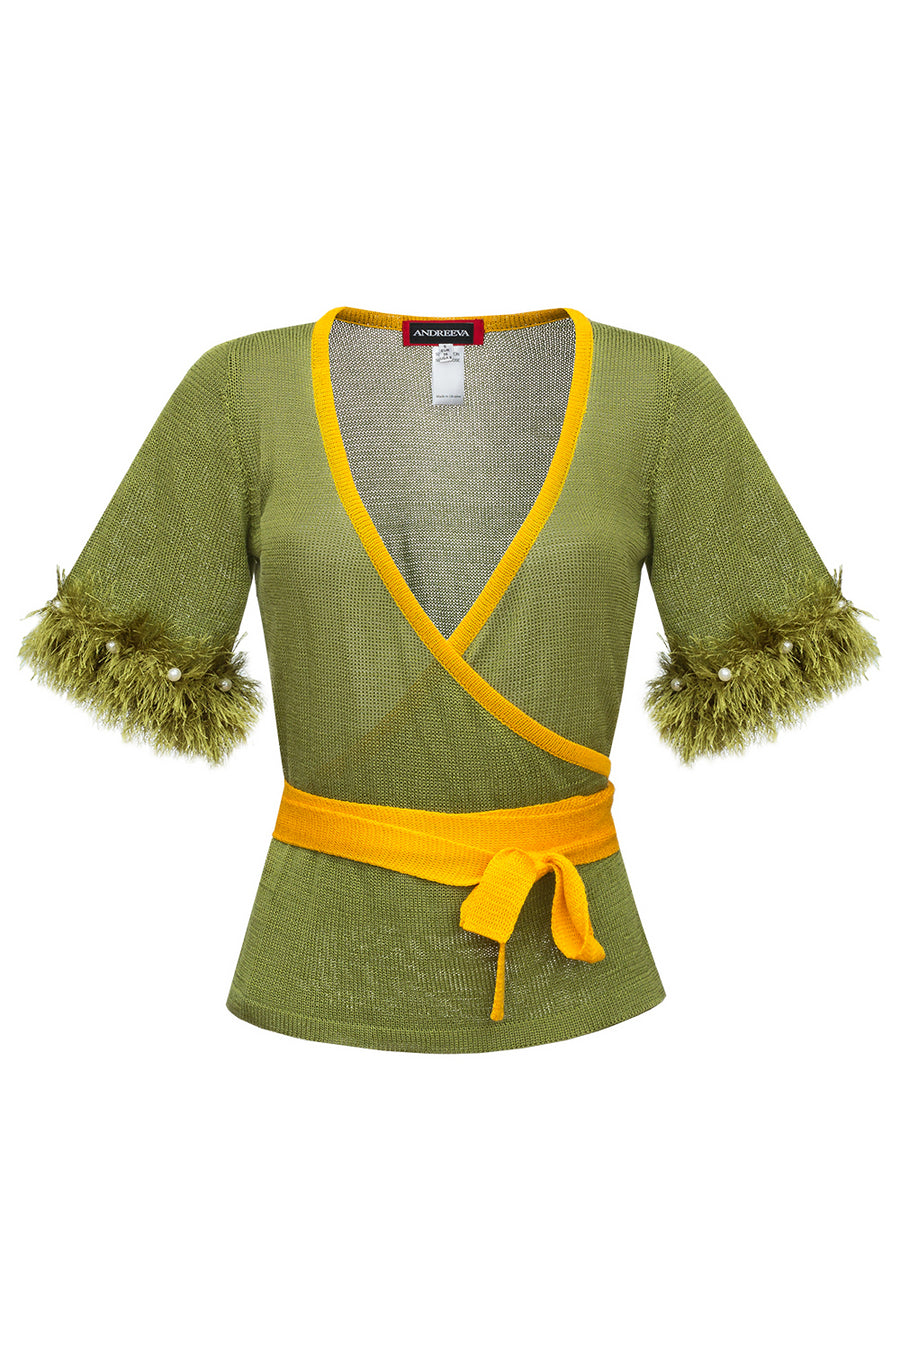 andreeva green knit top